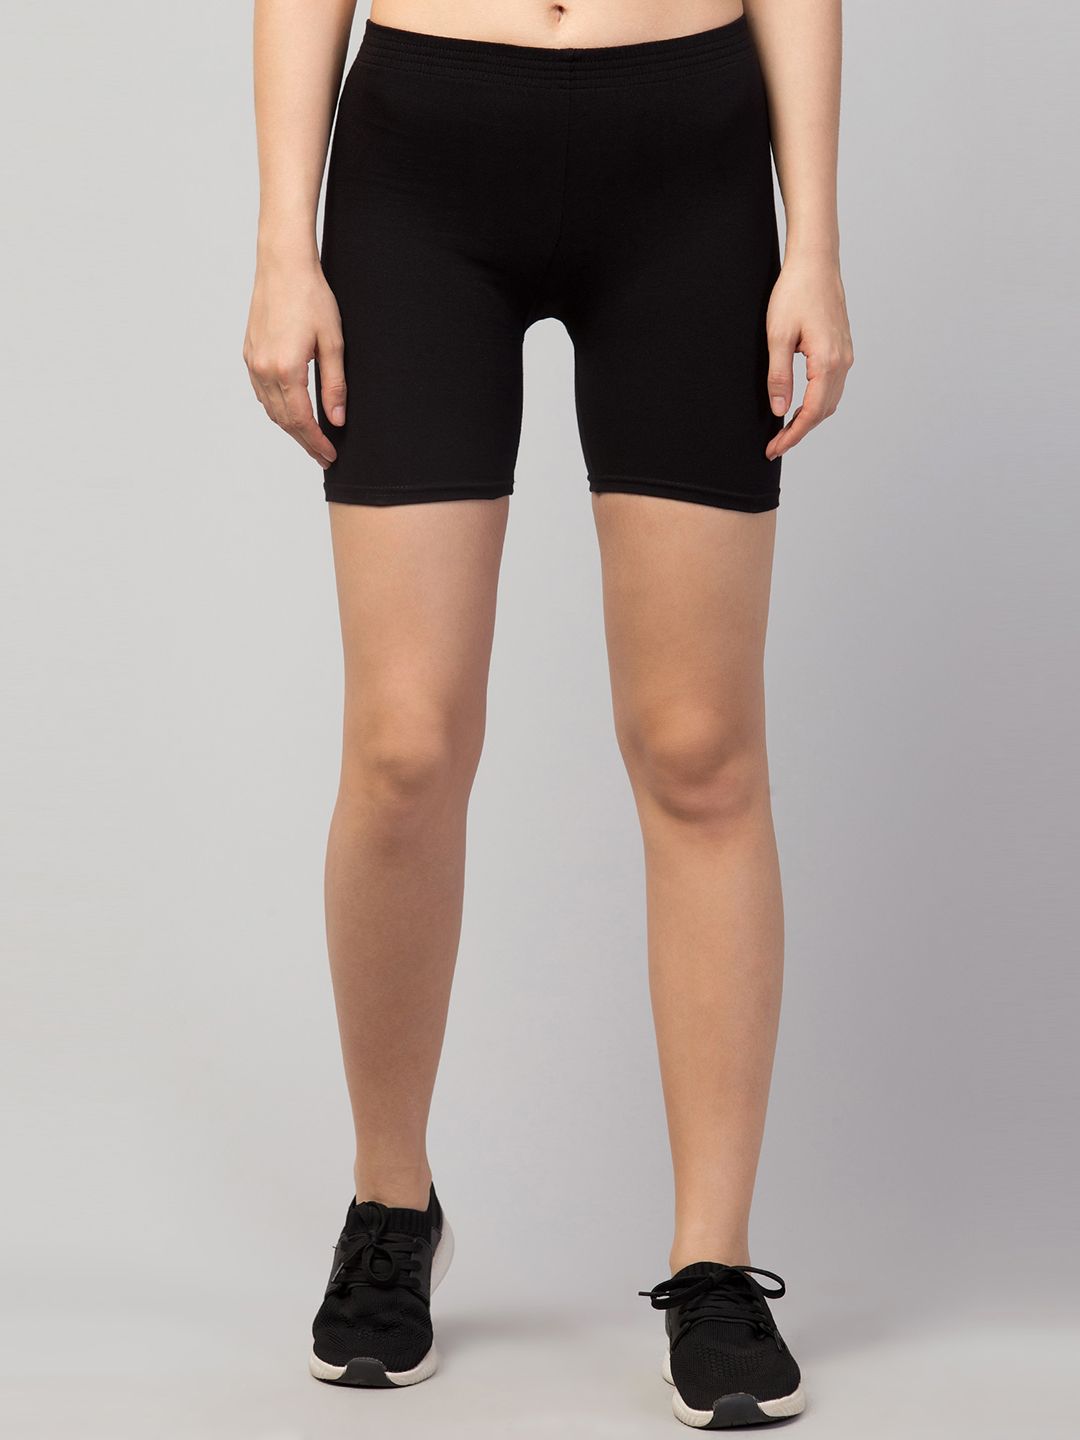 Apraa & Parma Women Black Slim Fit Cotton Sports Shorts Price in India